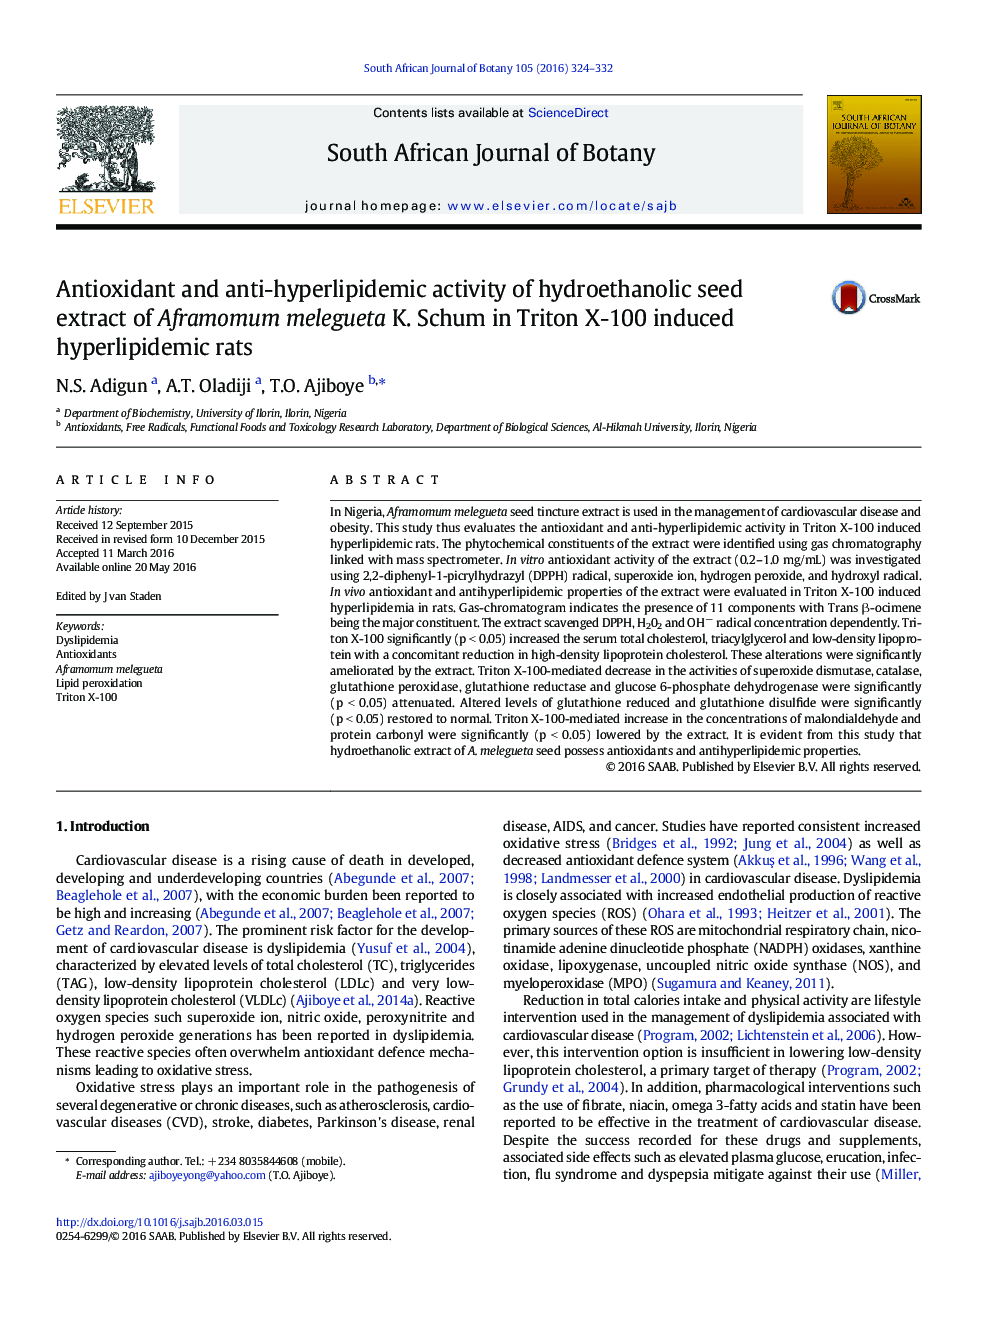 Antioxidant and anti-hyperlipidemic activity of hydroethanolic seed extract of Aframomum melegueta K. Schum in Triton X-100 induced hyperlipidemic rats